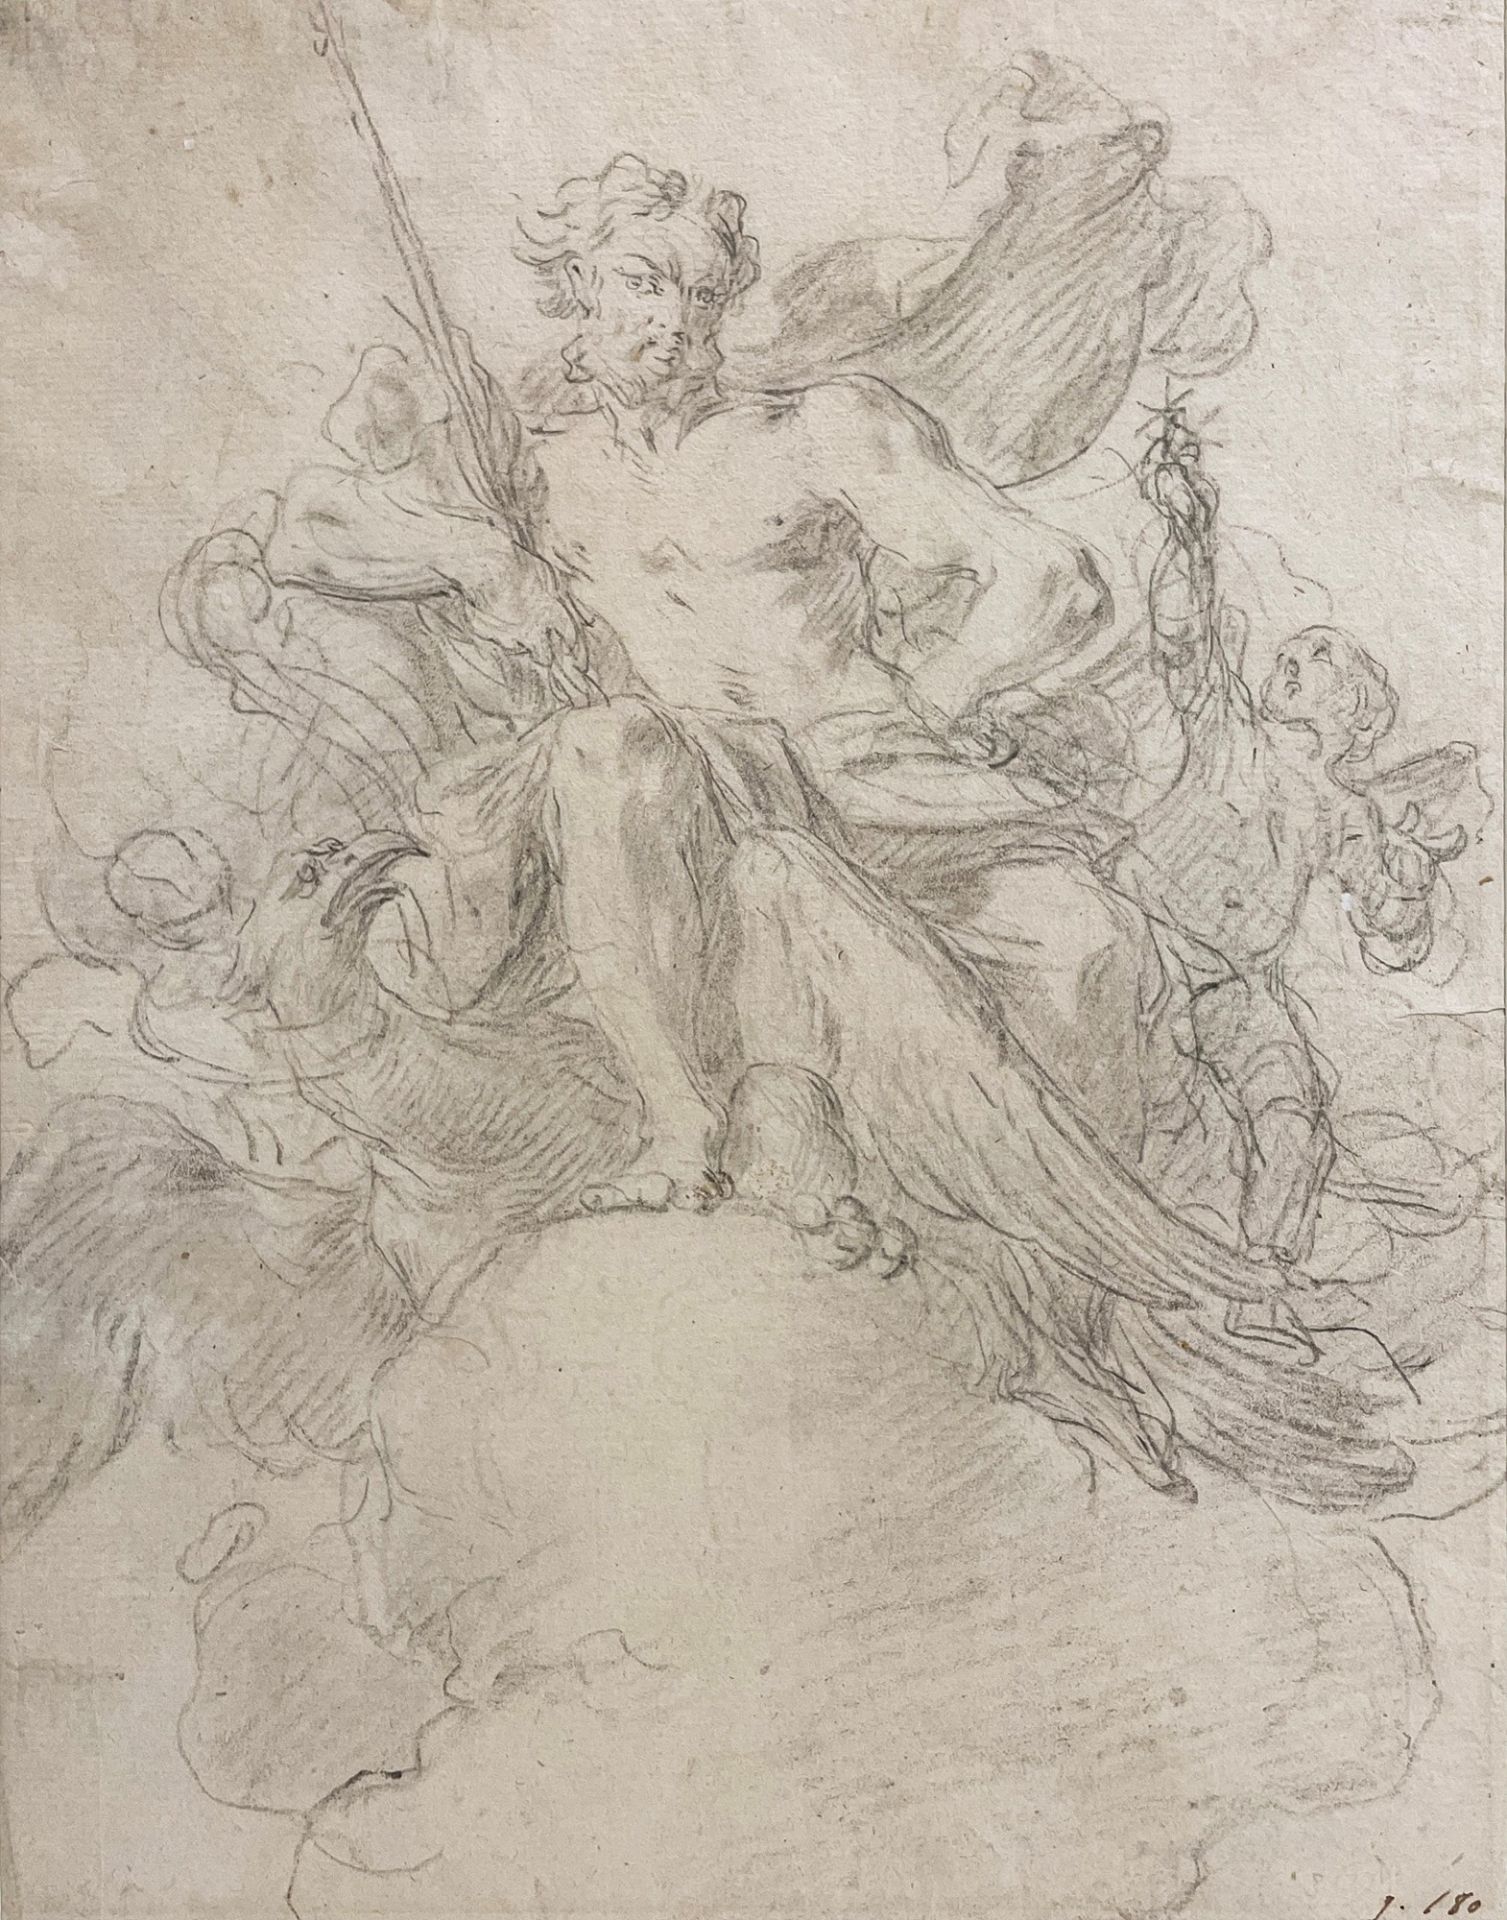 Attributed to Francesco Solimena (Canale di Serino 1657-Barra 1747) - Jupiter